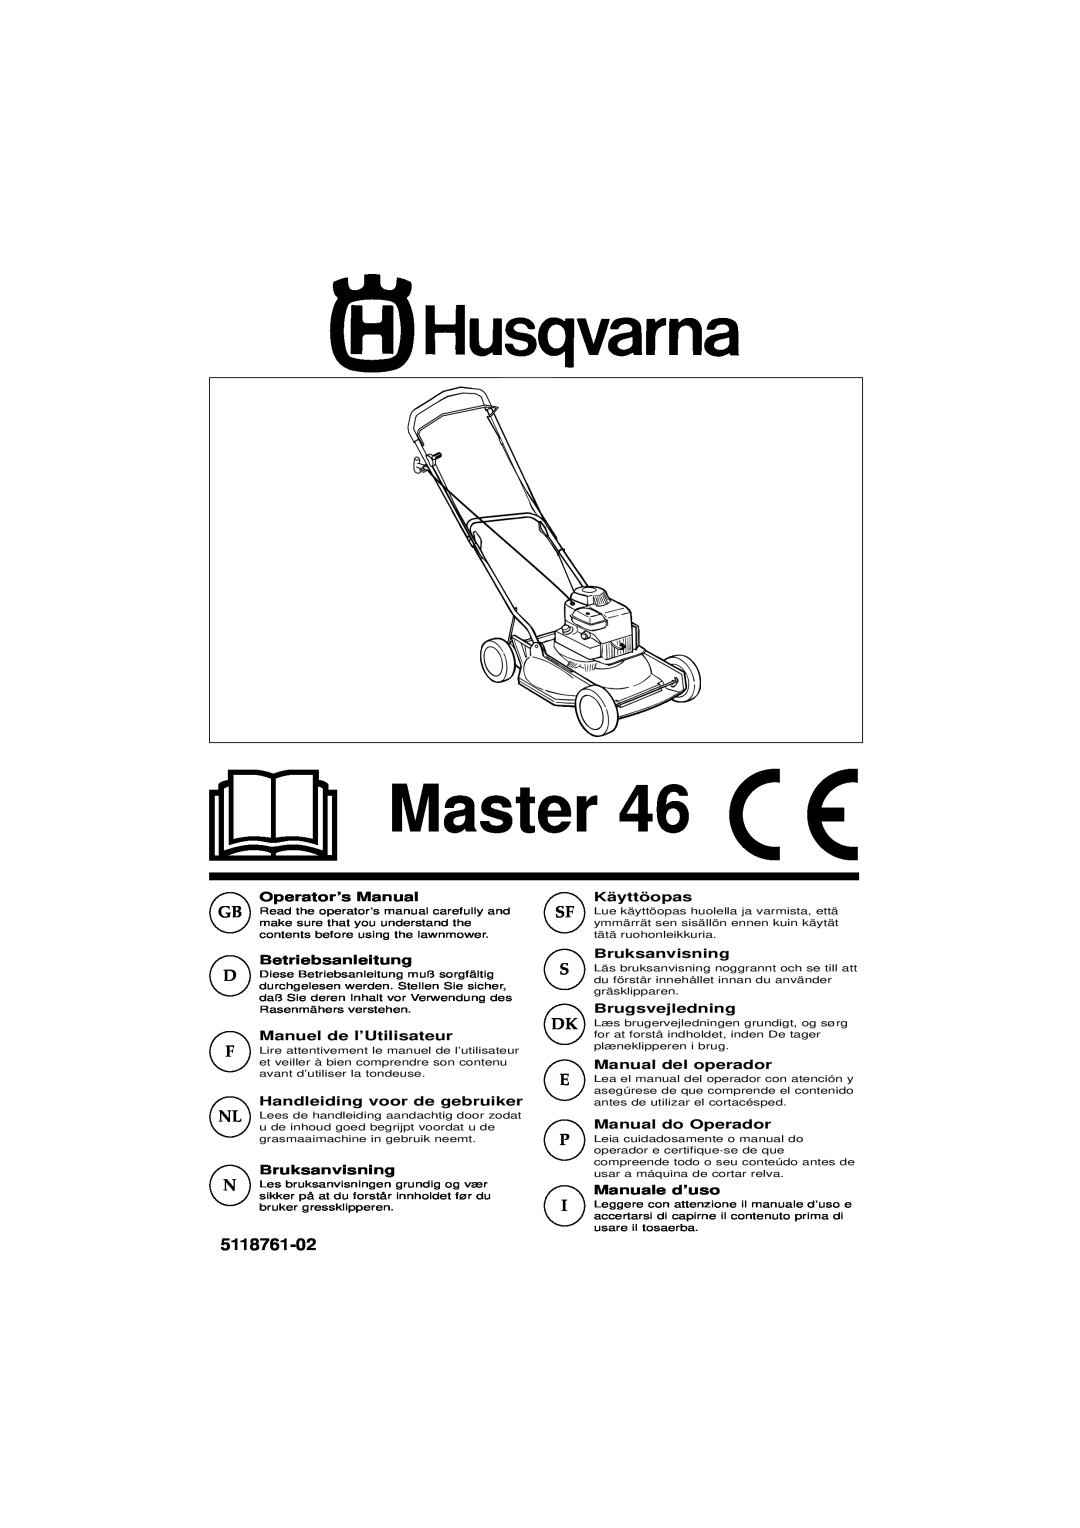 Husqvarna Master 46 manual 5118761-02, Operator’s Manual, Betriebsanleitung, Manuel de l’Utilisateur, Bruksanvisning 